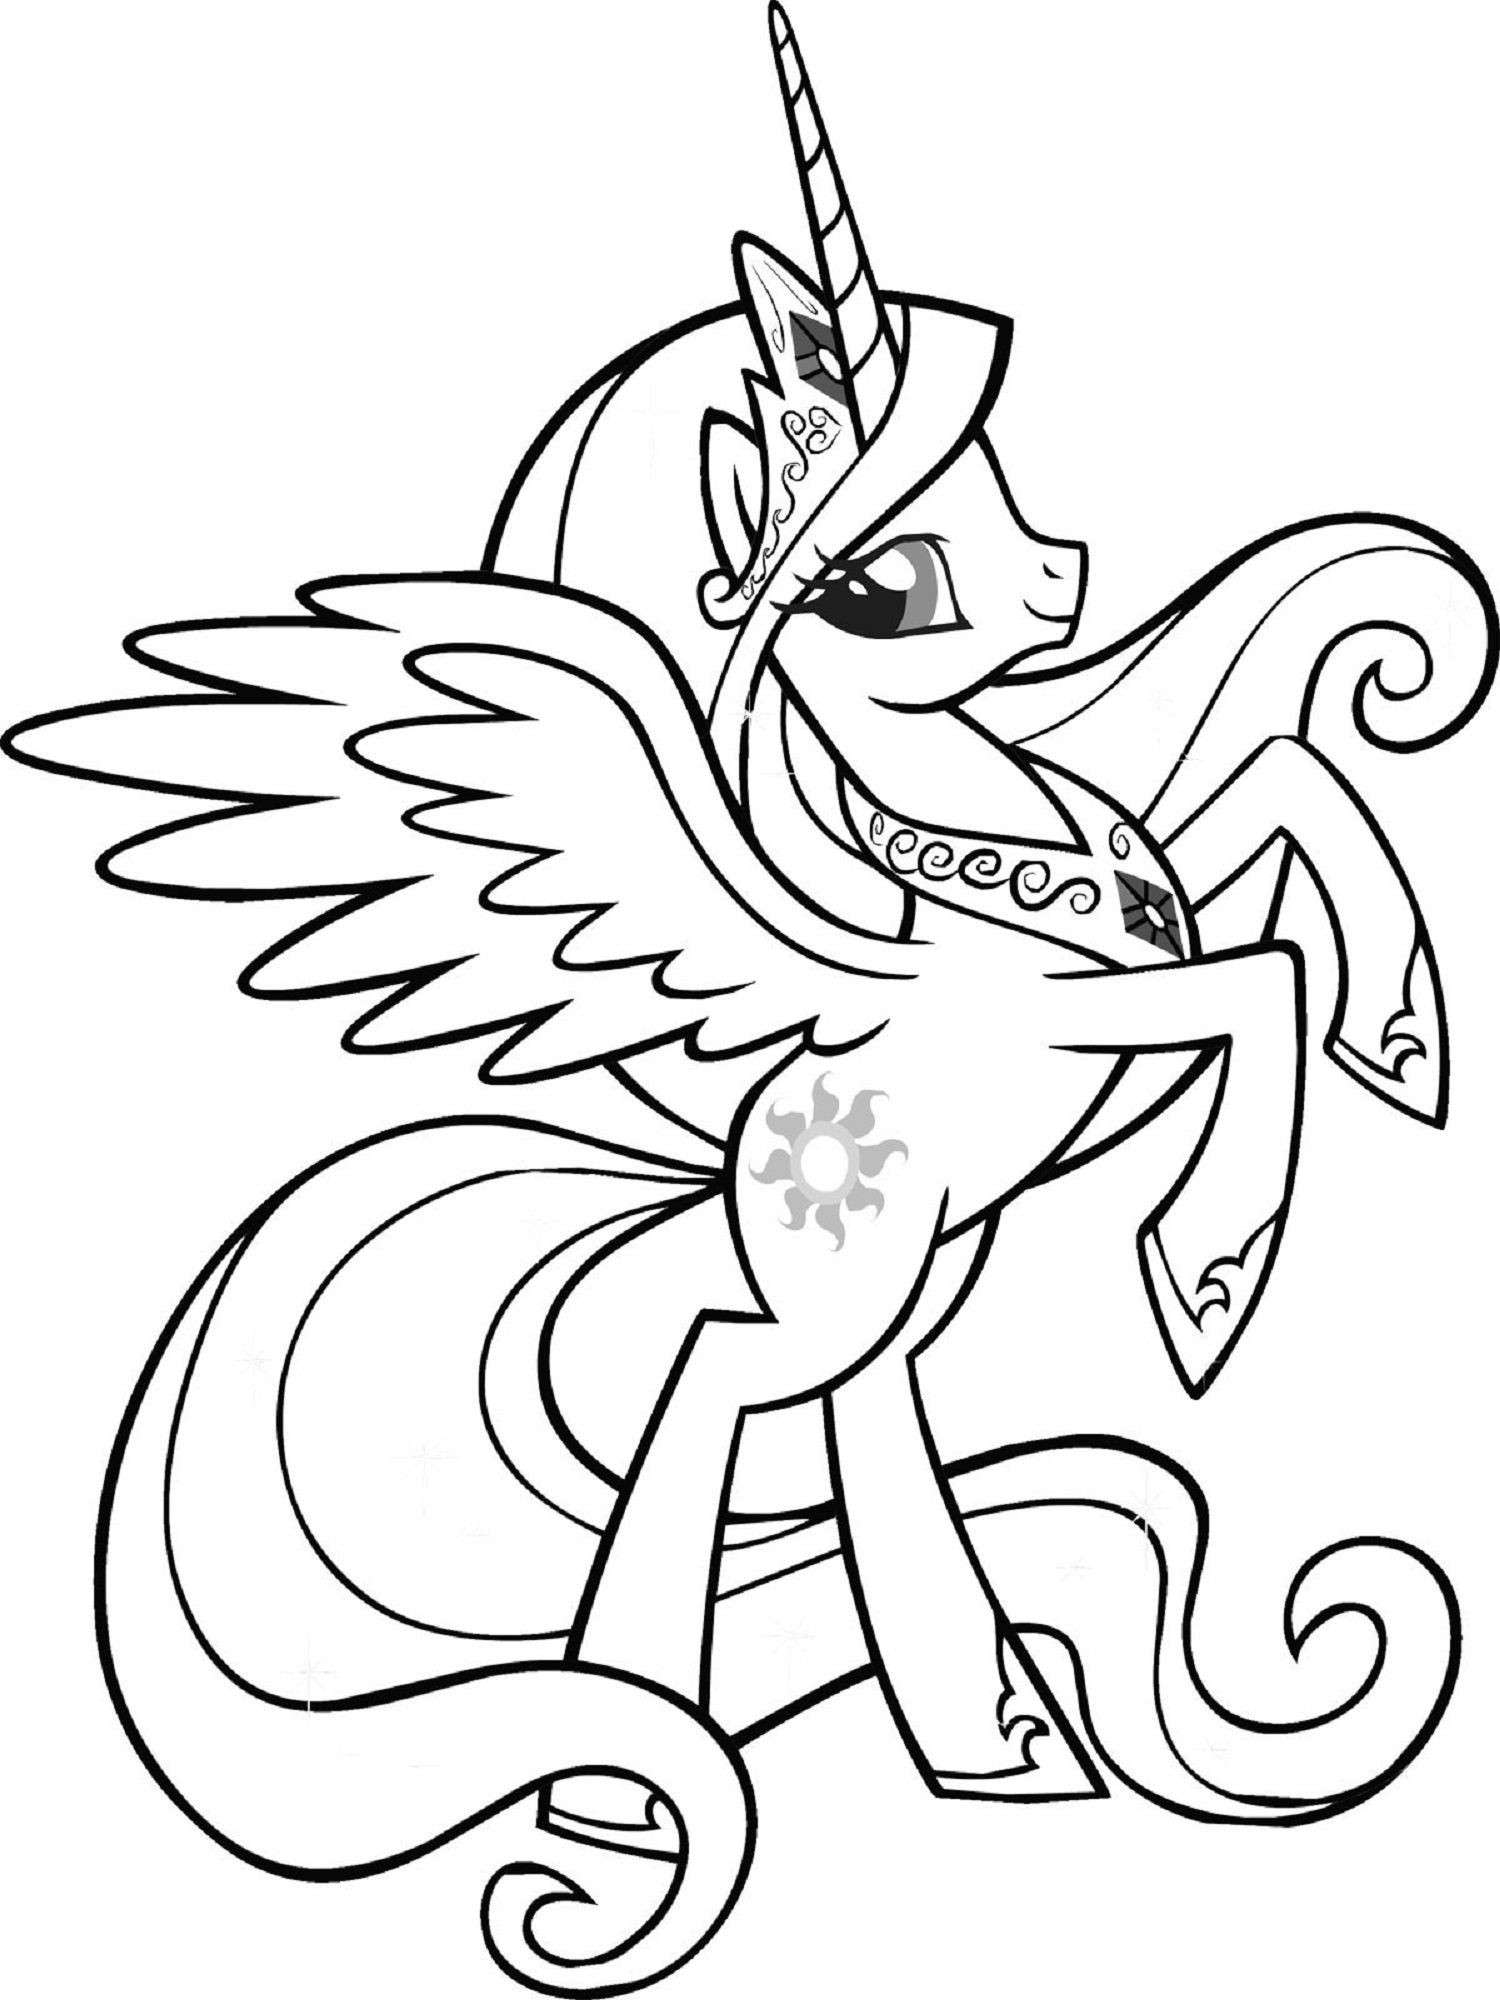 Vẽ Pony và những người bạn  How to Draw My Little Pony step by step  How  to Draw Princess Celestia  YouTube